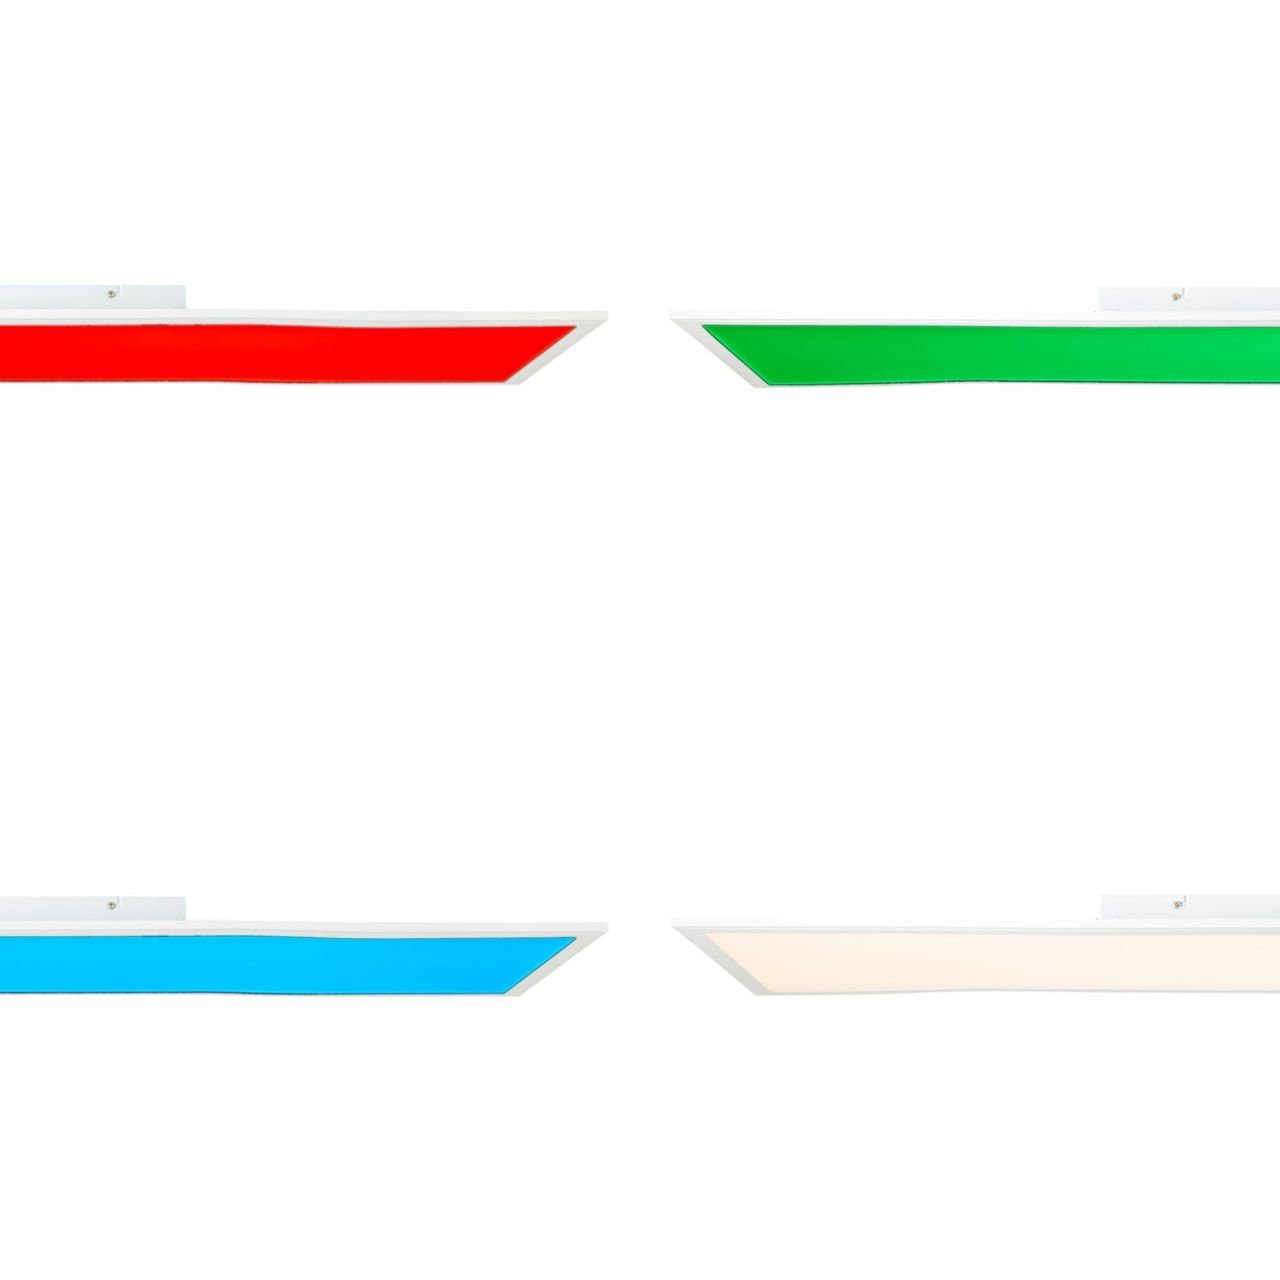 Panel dimmbar, 3800 weiß lm, Brilliant RGB, 30 Farbwechsler, CCT, 120 LED Abie, integriert, cm, Fernbedienung, LED x fest